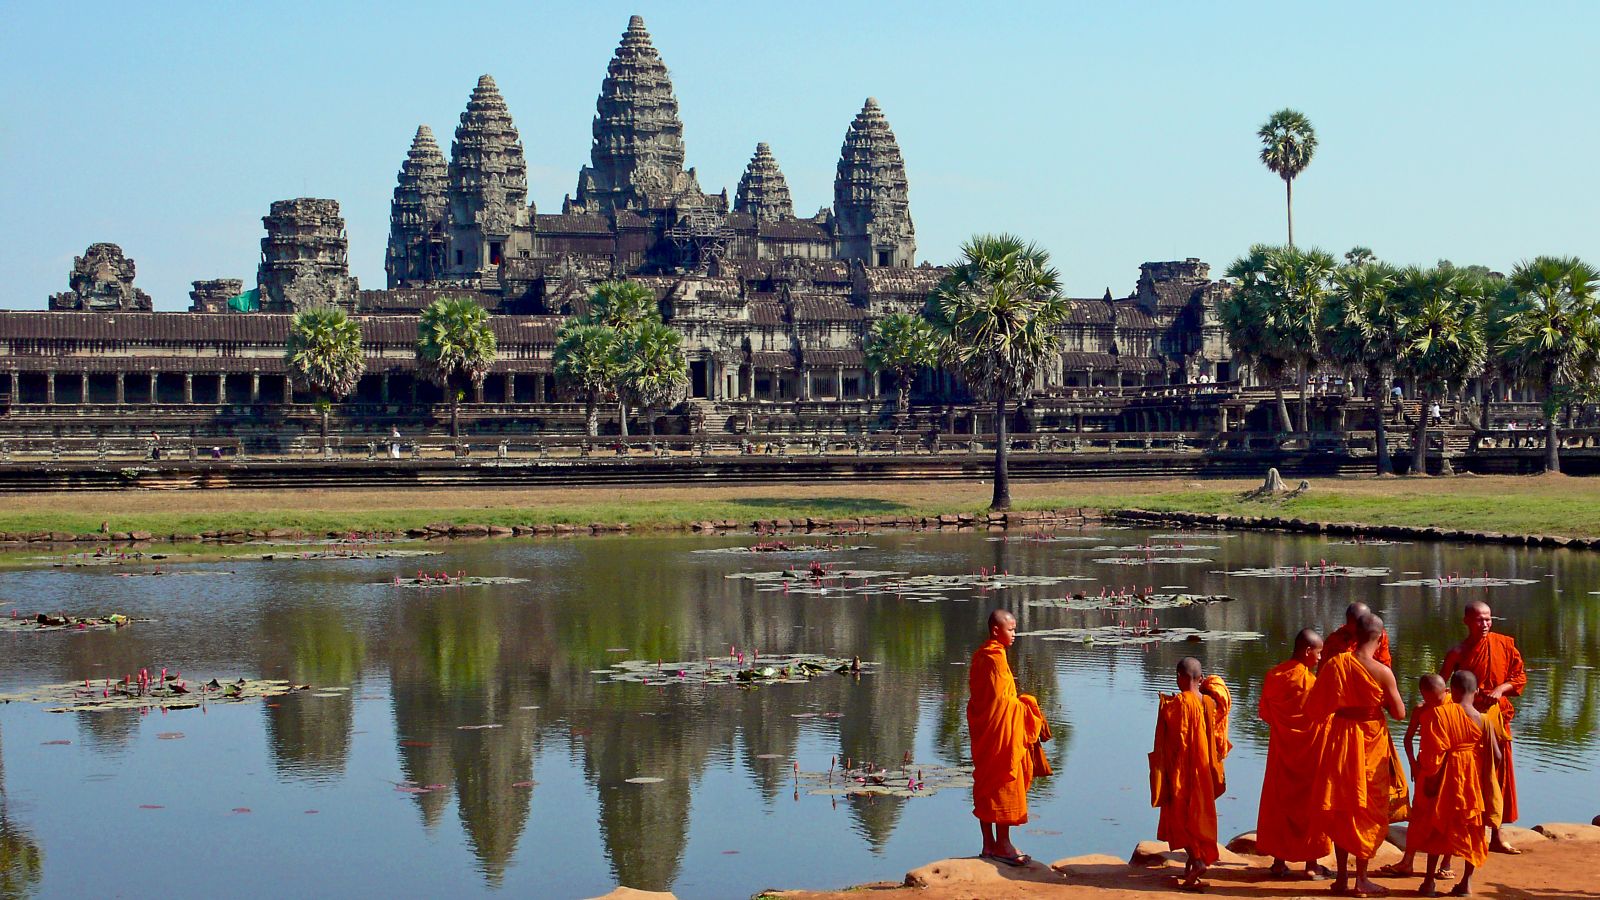 rondreis cambodja tips, rondreizen cambodja, tips rondreis cambodja, cambodja rondreizen, cambodja rondreis